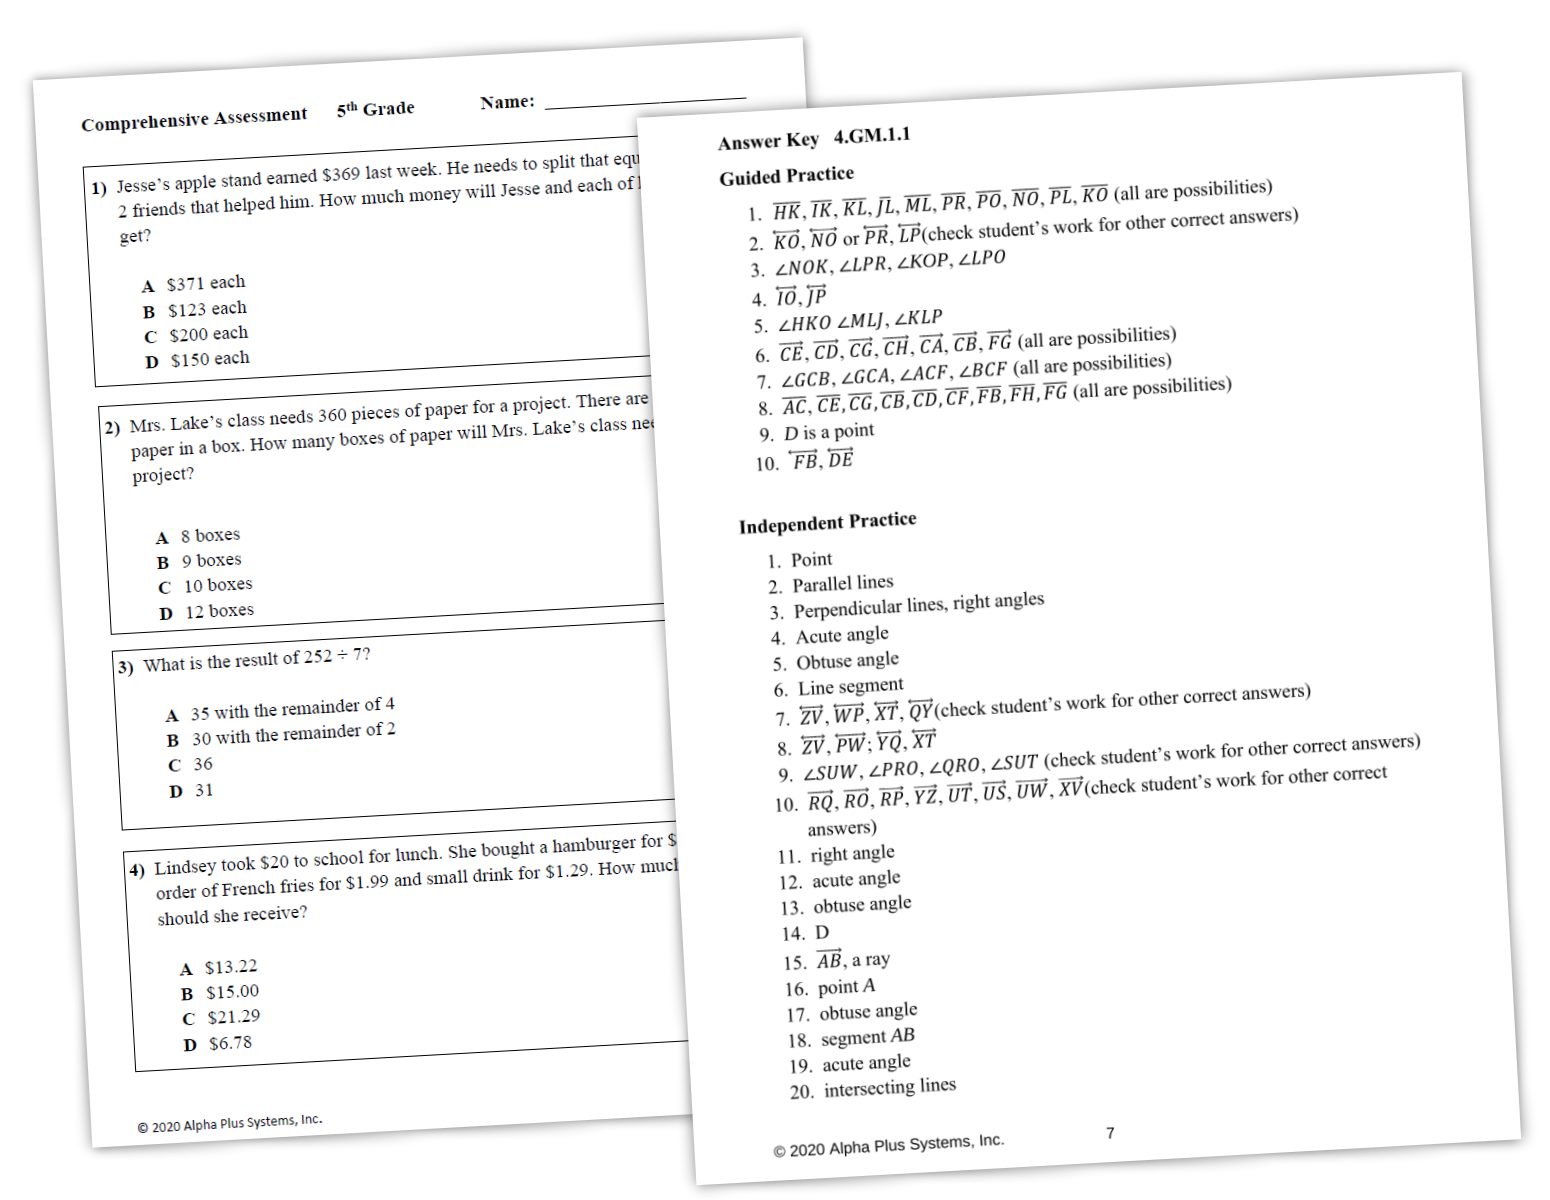 OAS Math Book Comprehensive Assessment, Answer Key